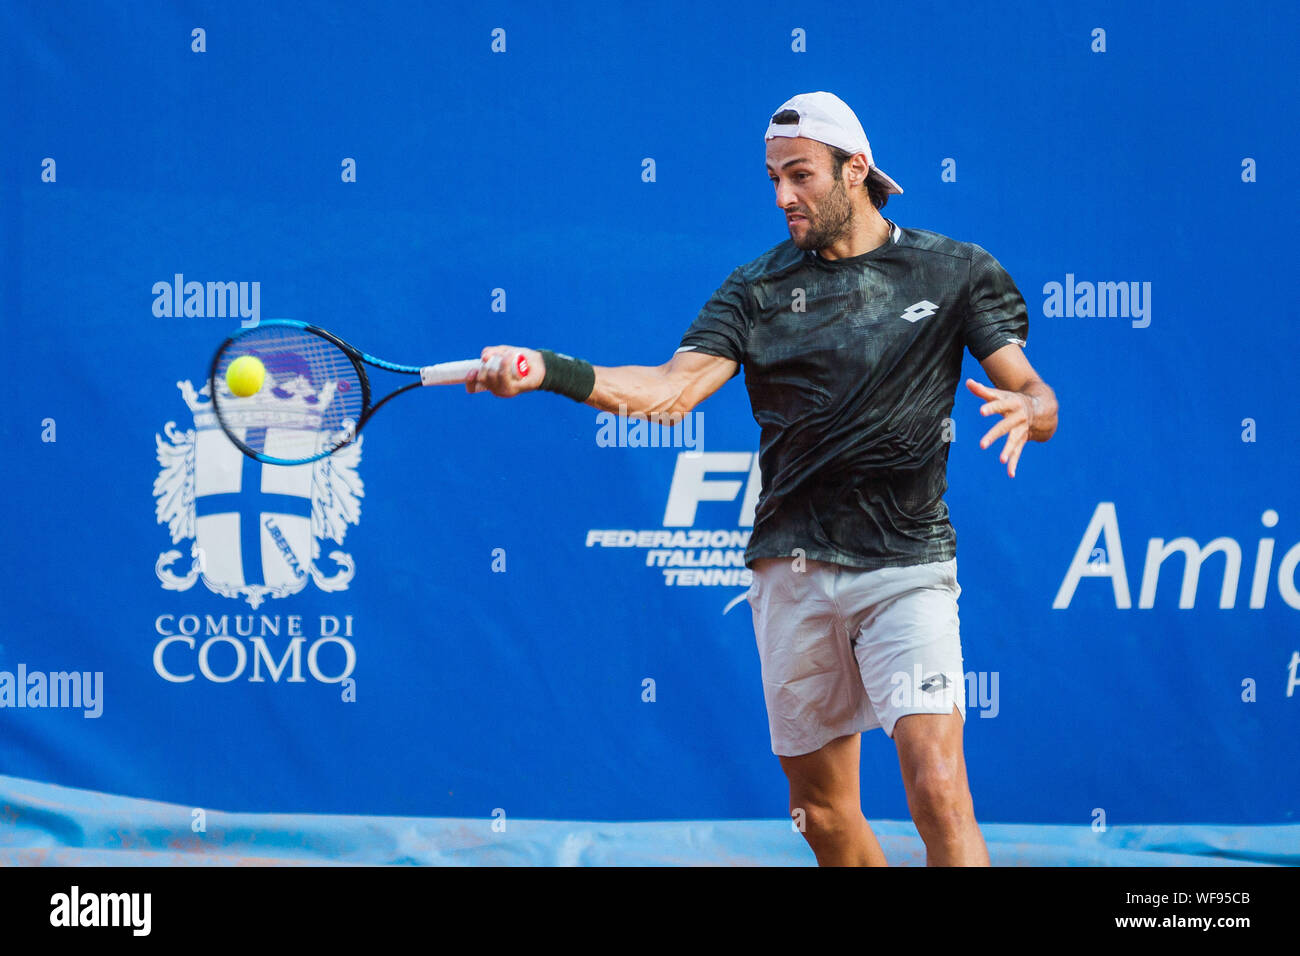 STEFANO TRAVAGLIA during Atp Challenger Como 2019, Como, Italy, 30 Aug  2019, Tennis Tennis Internationals Stock Photo - Alamy